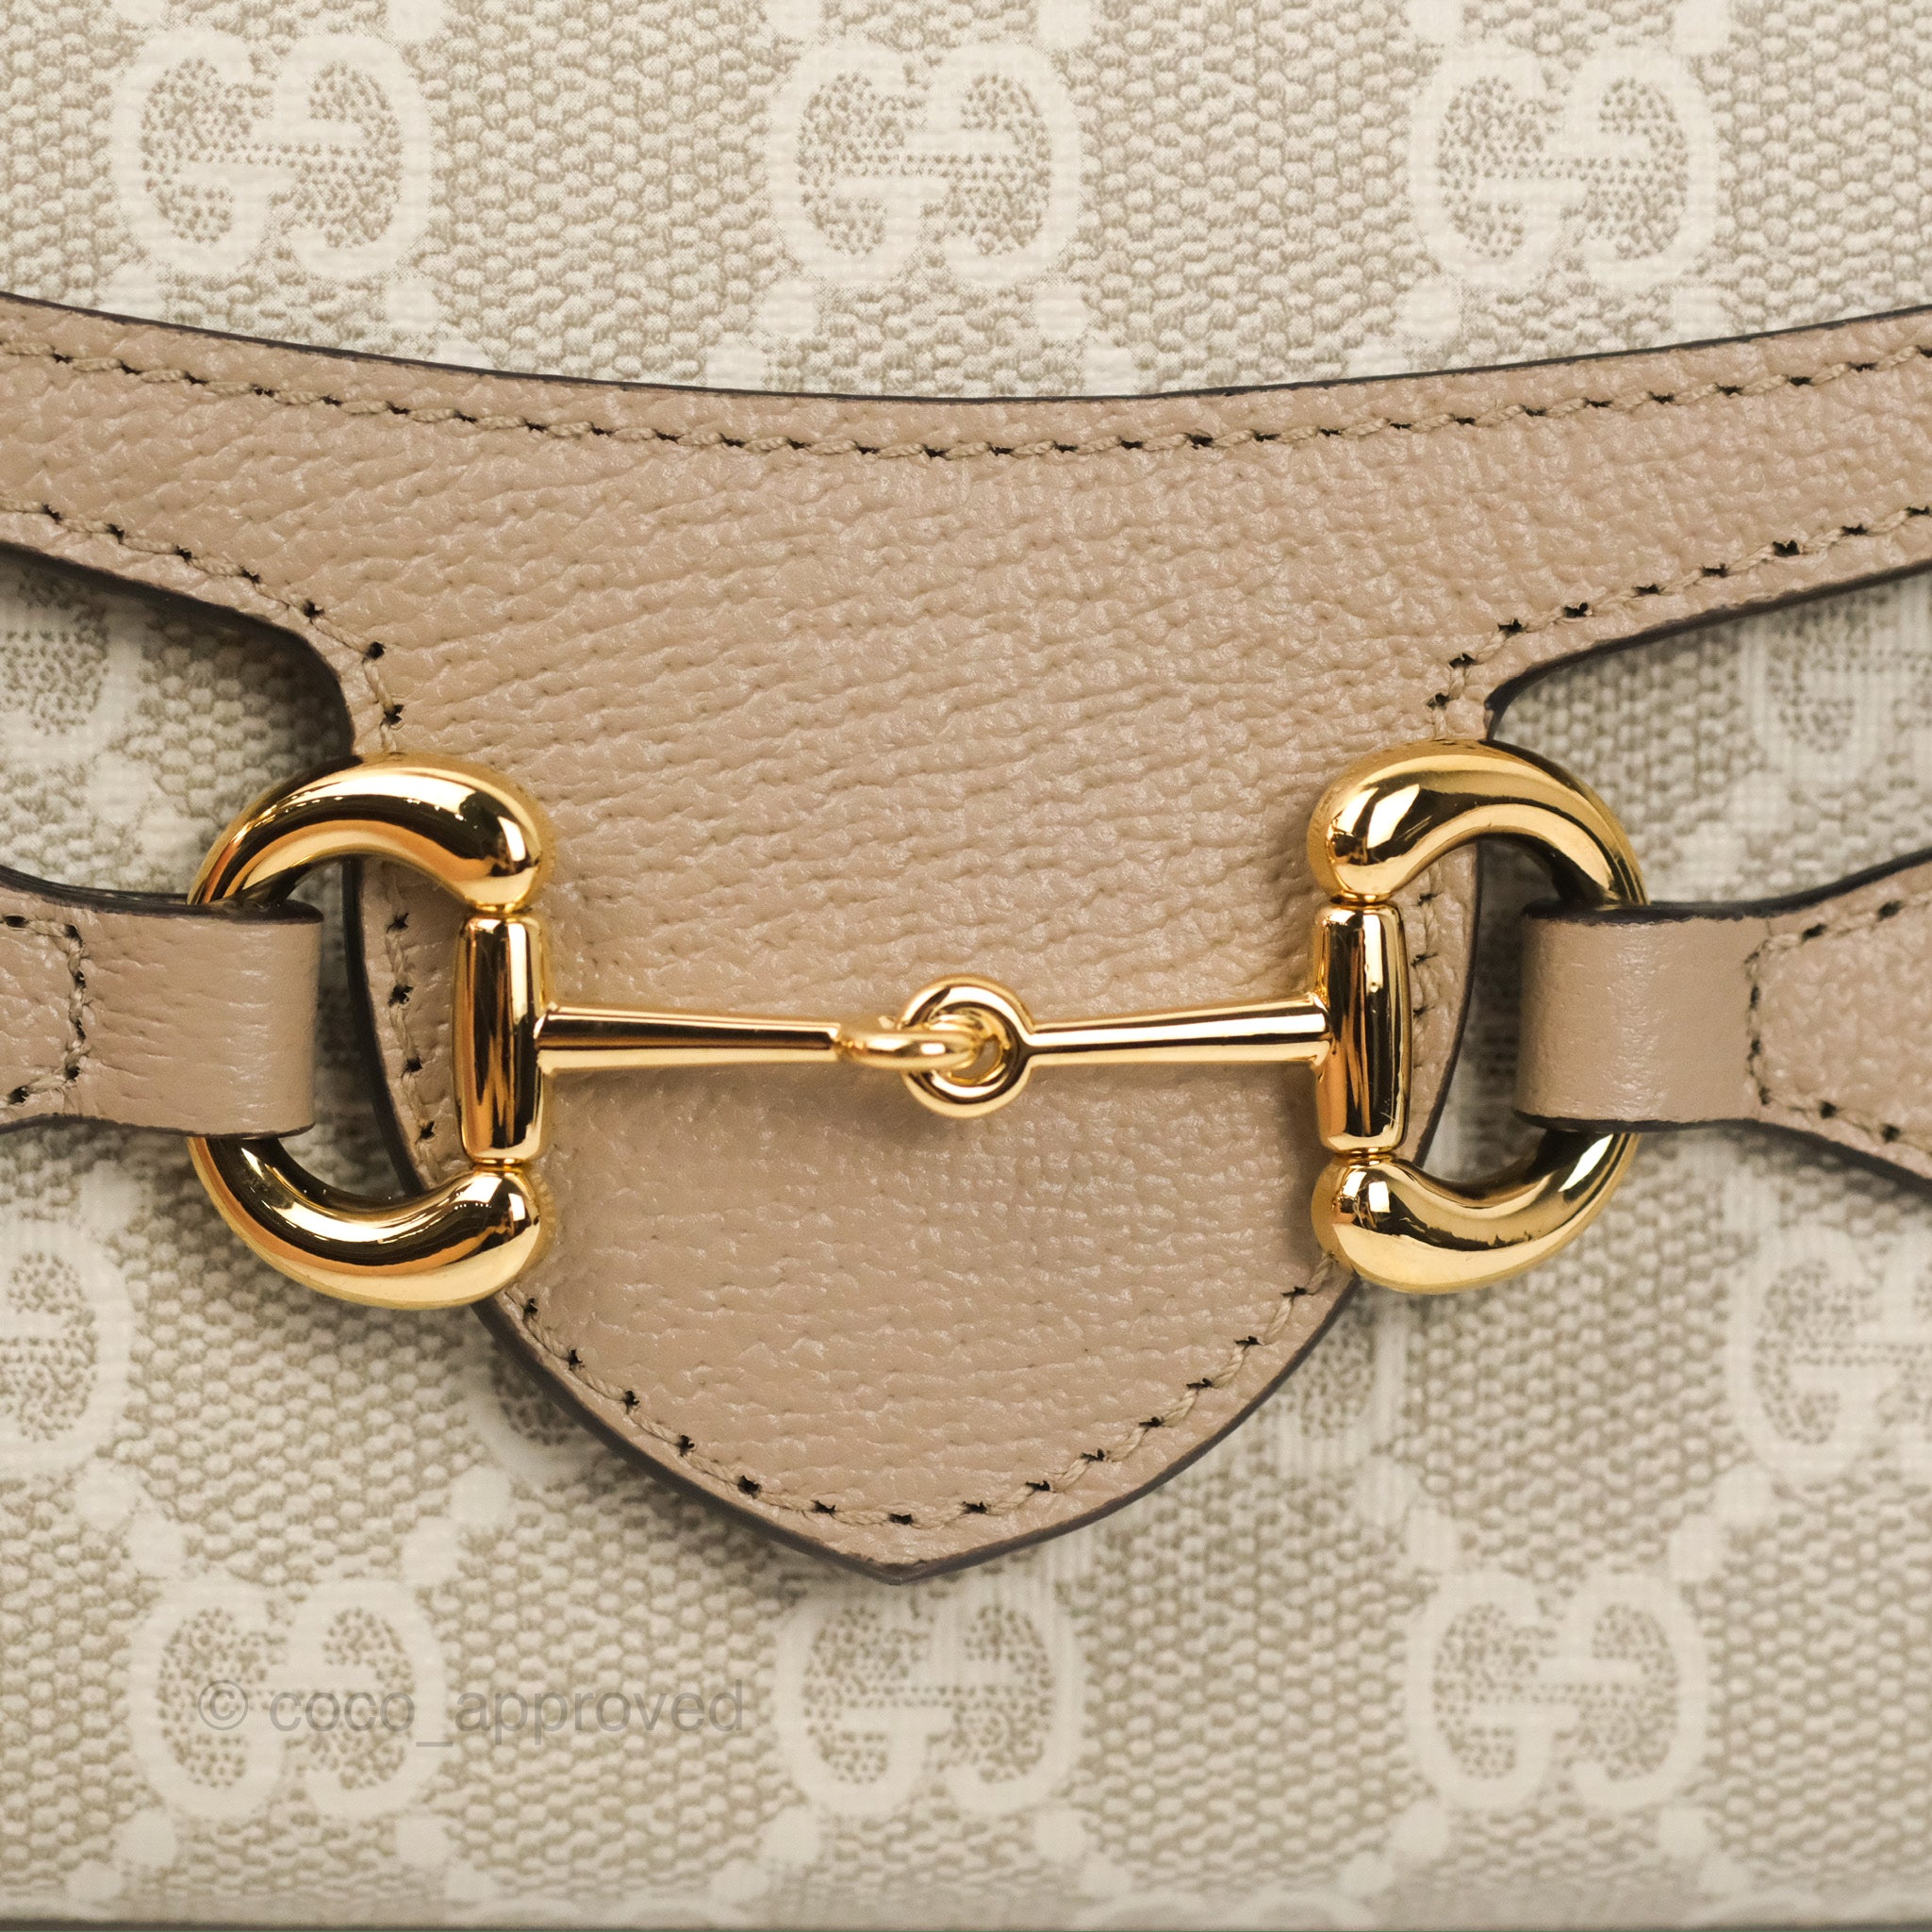 Gucci Horsebit 1955 GG mini bag in beige and white canvas